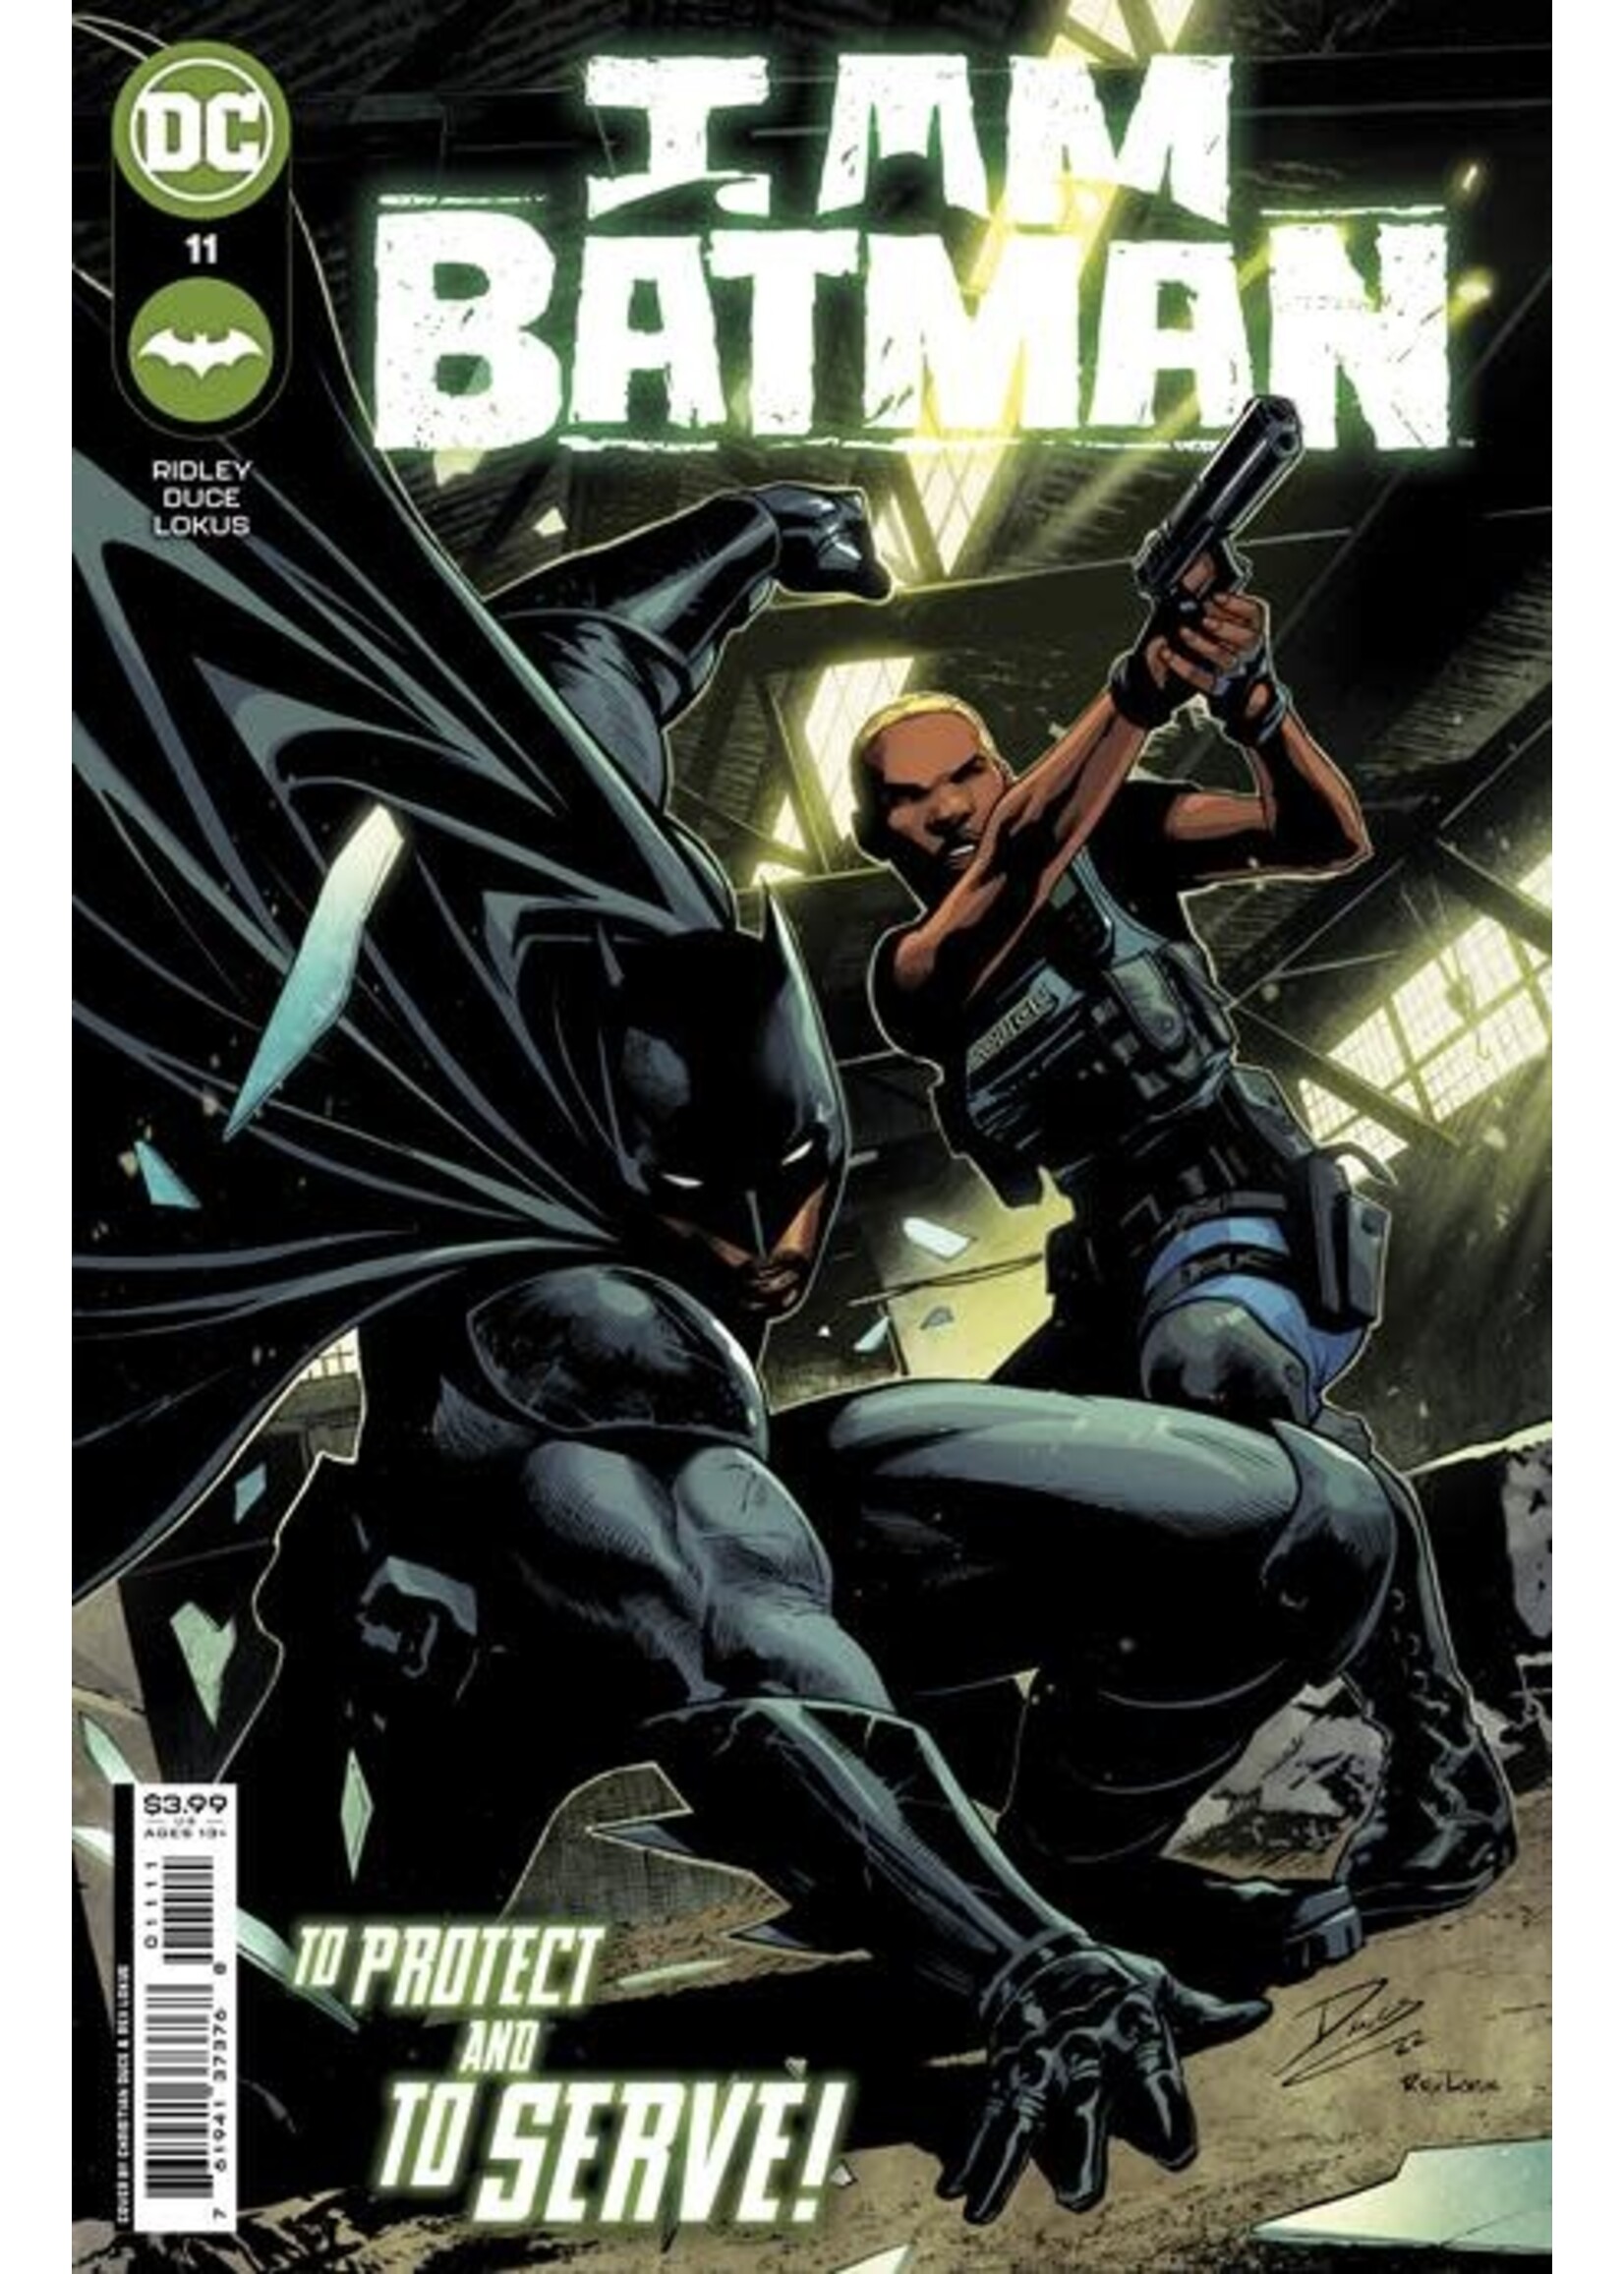 DC COMICS I AM BATMAN issues #9-13 bundle